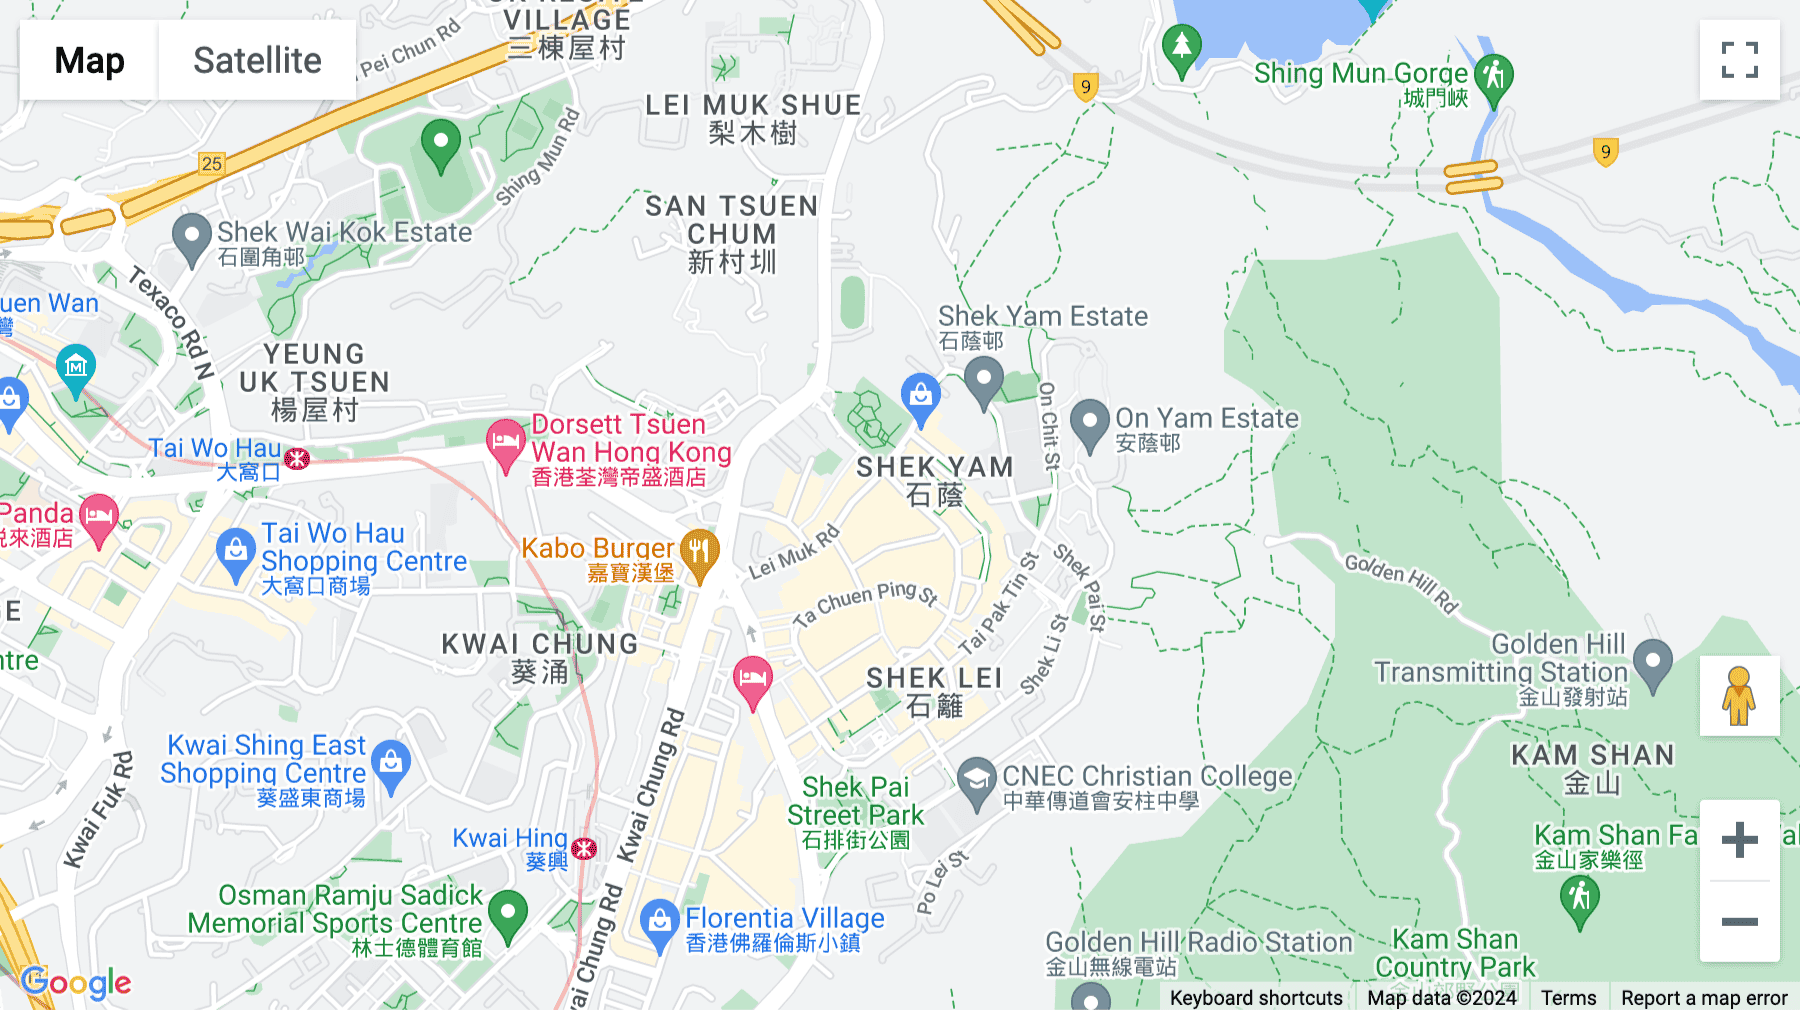 Click for interative map of RM 904 Riley House, 88 Lei Muk Road, Kwai Chung, Tsuen Wan